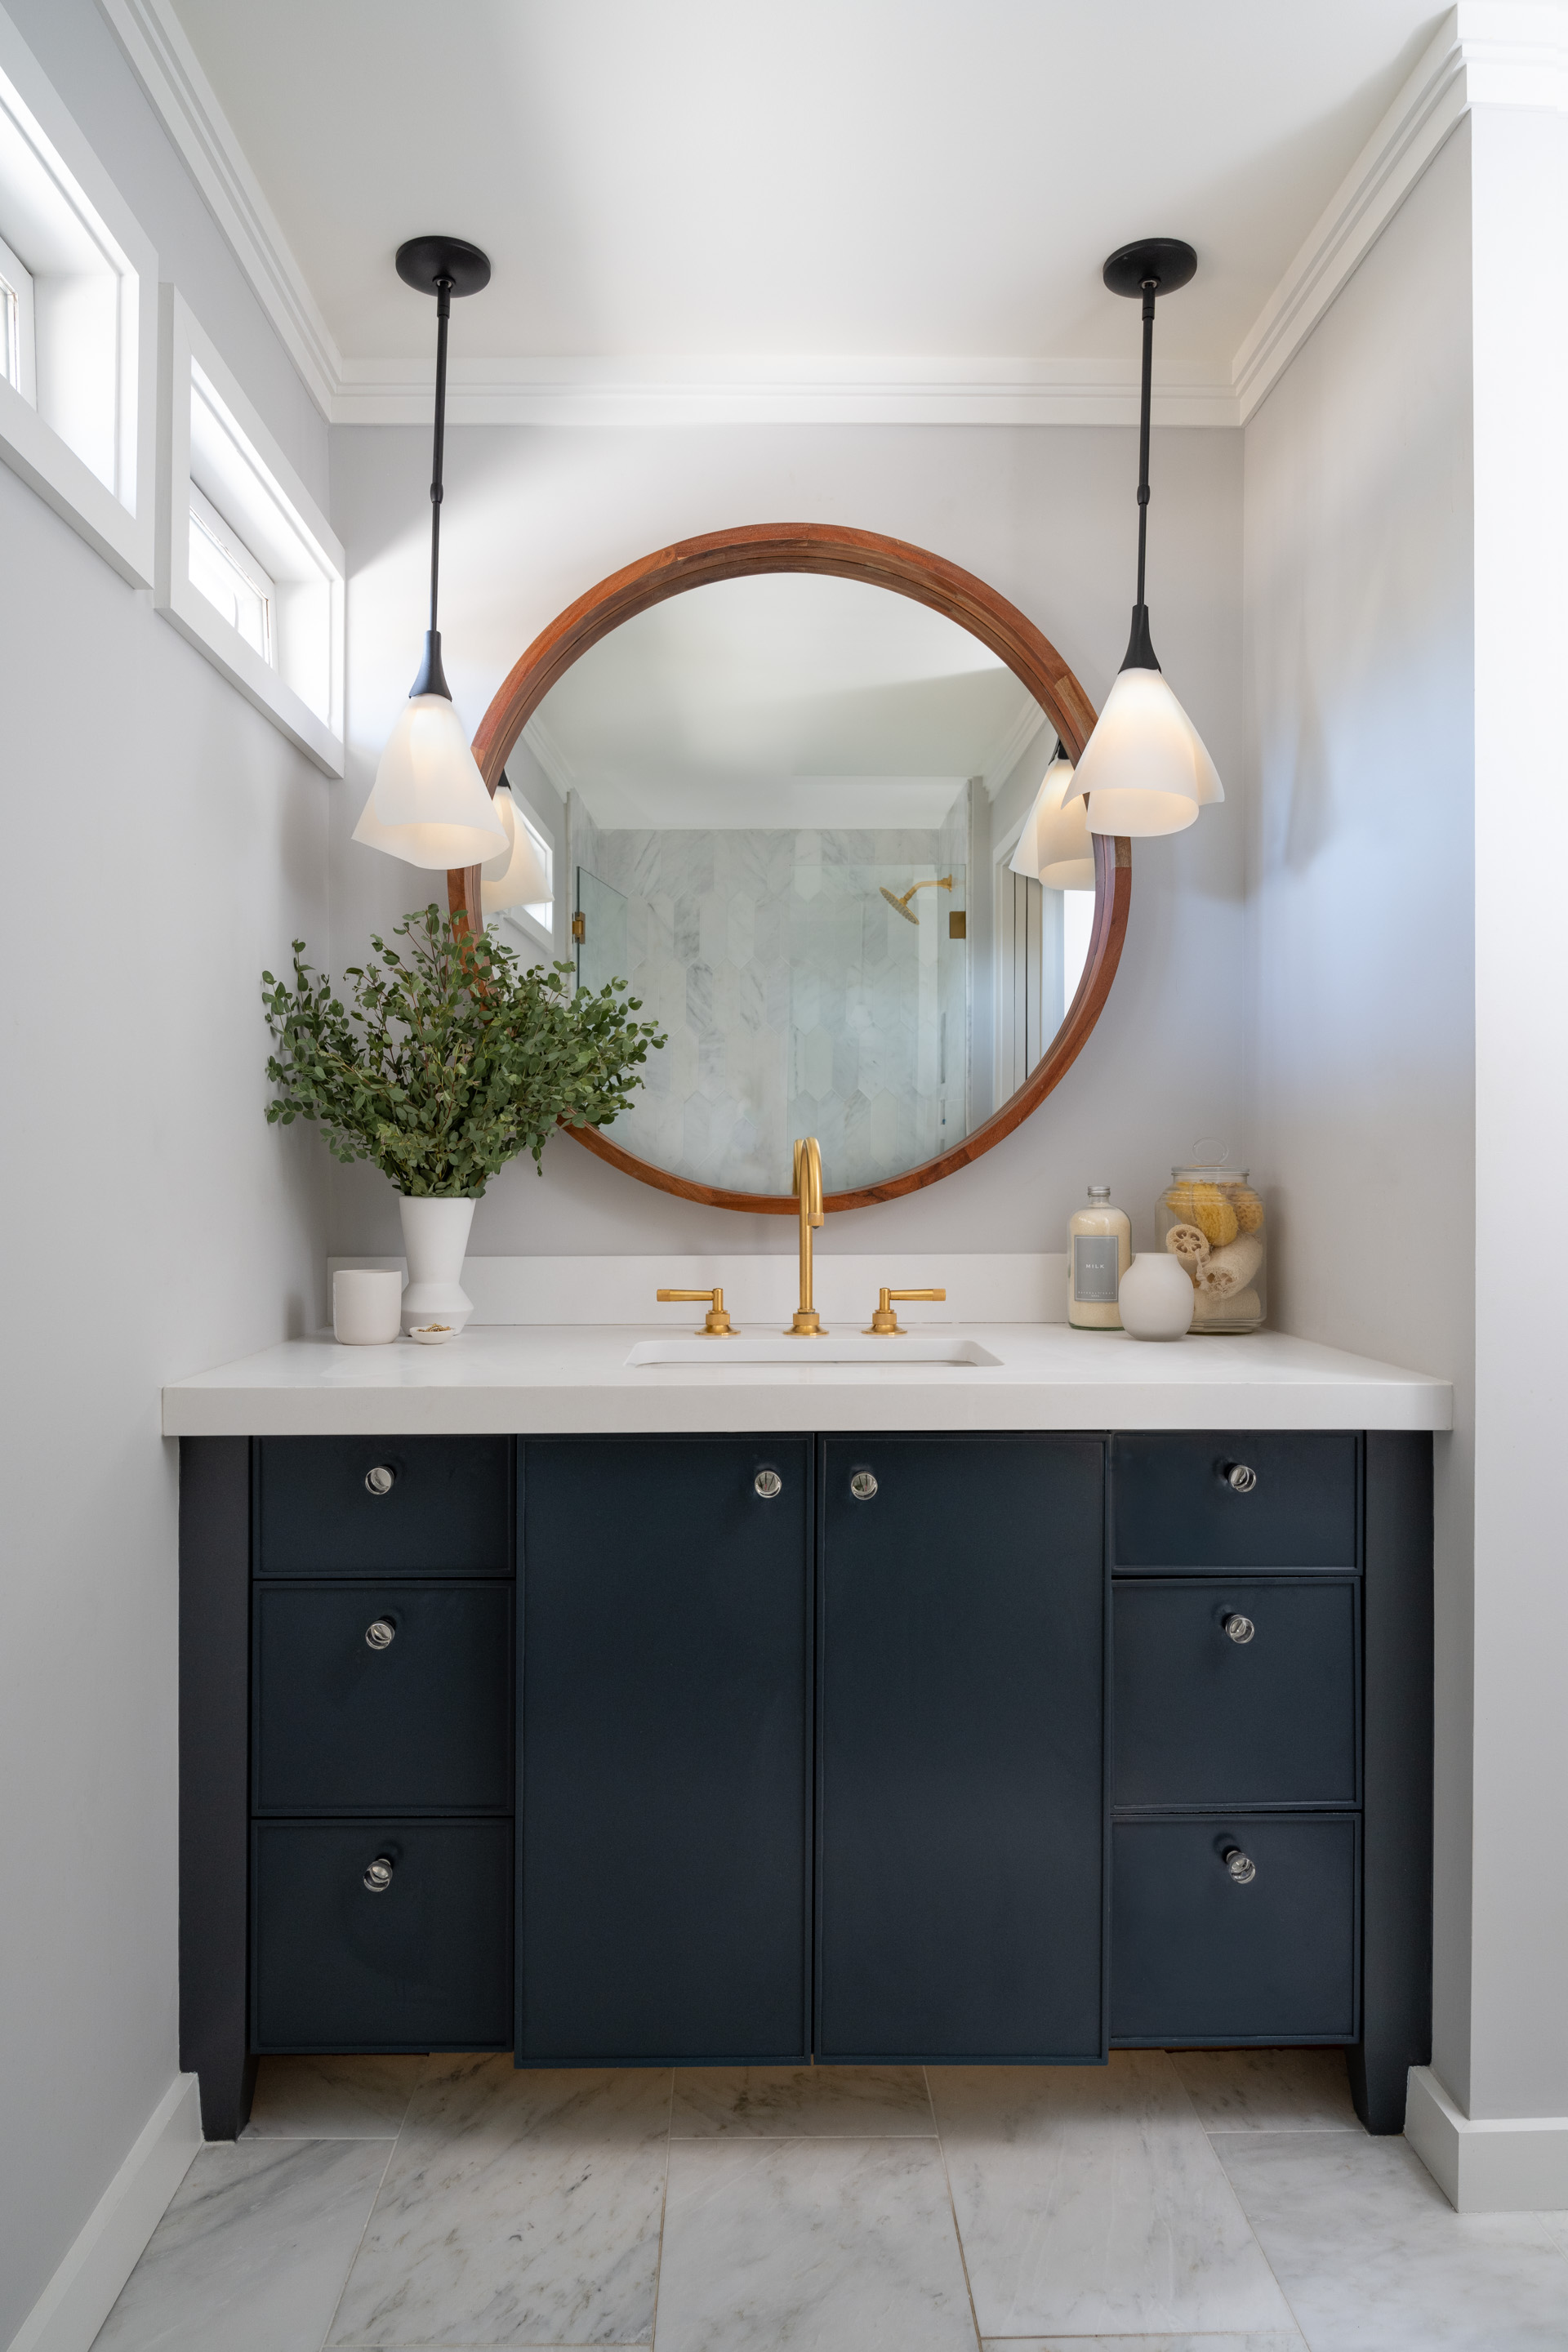 Chicago Interior Design and Architecture  Photographer - Bathroom Vanity